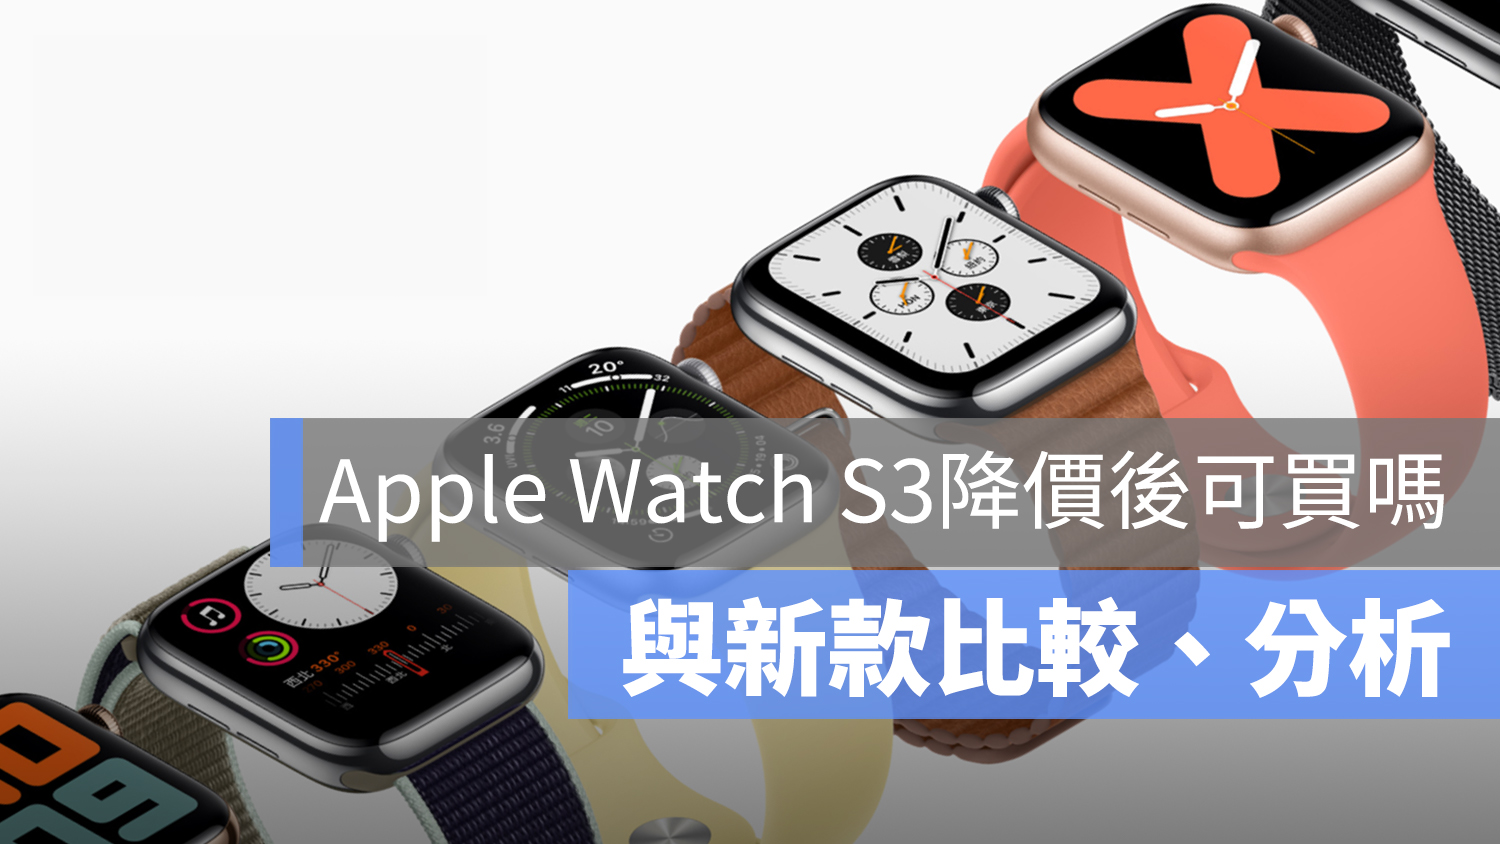 Apple Watch Series 3 比較 分析